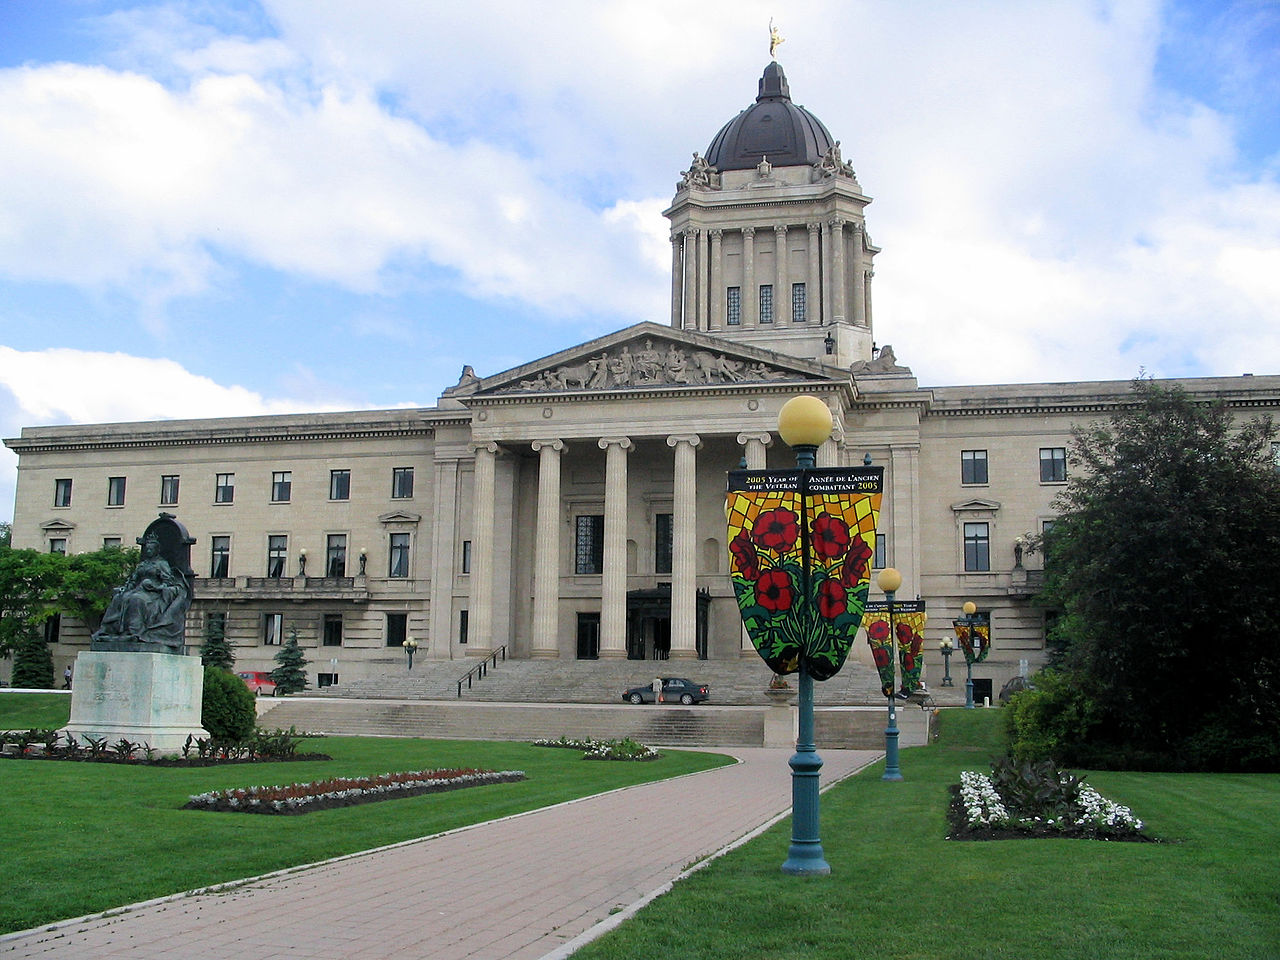 The Manitoba Legislative Building